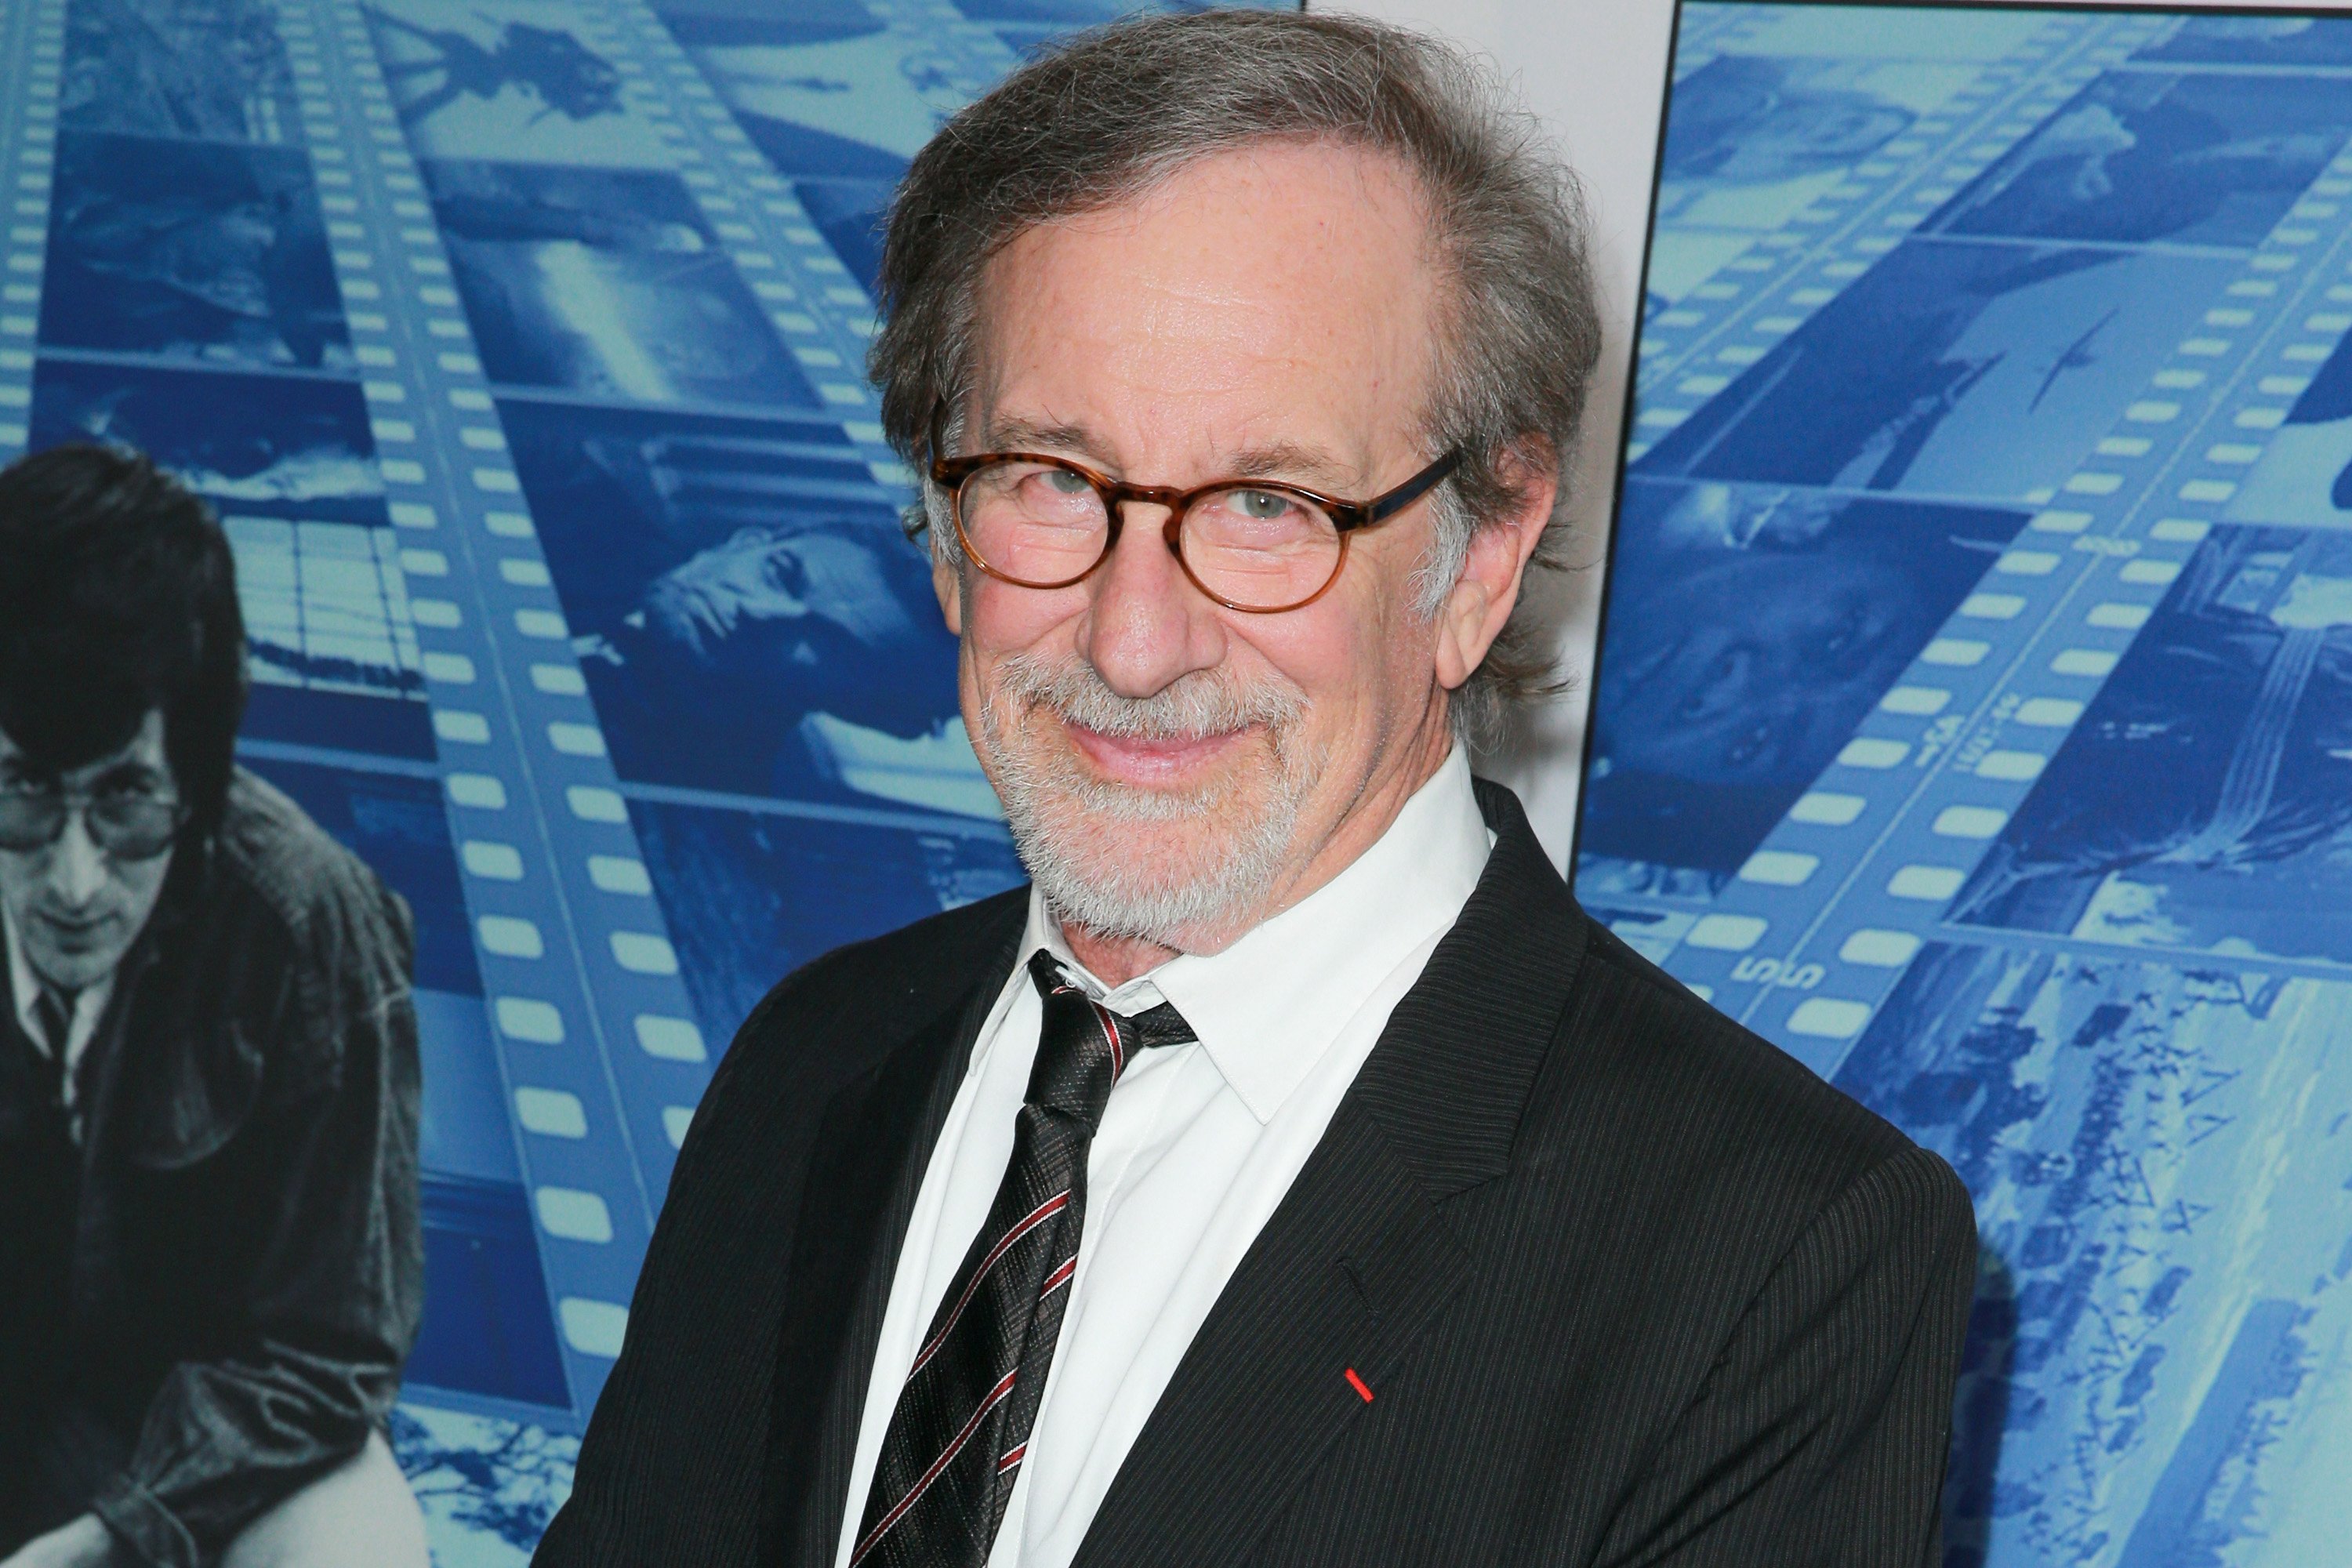 Steven Spielberg wearing a black suit and tie